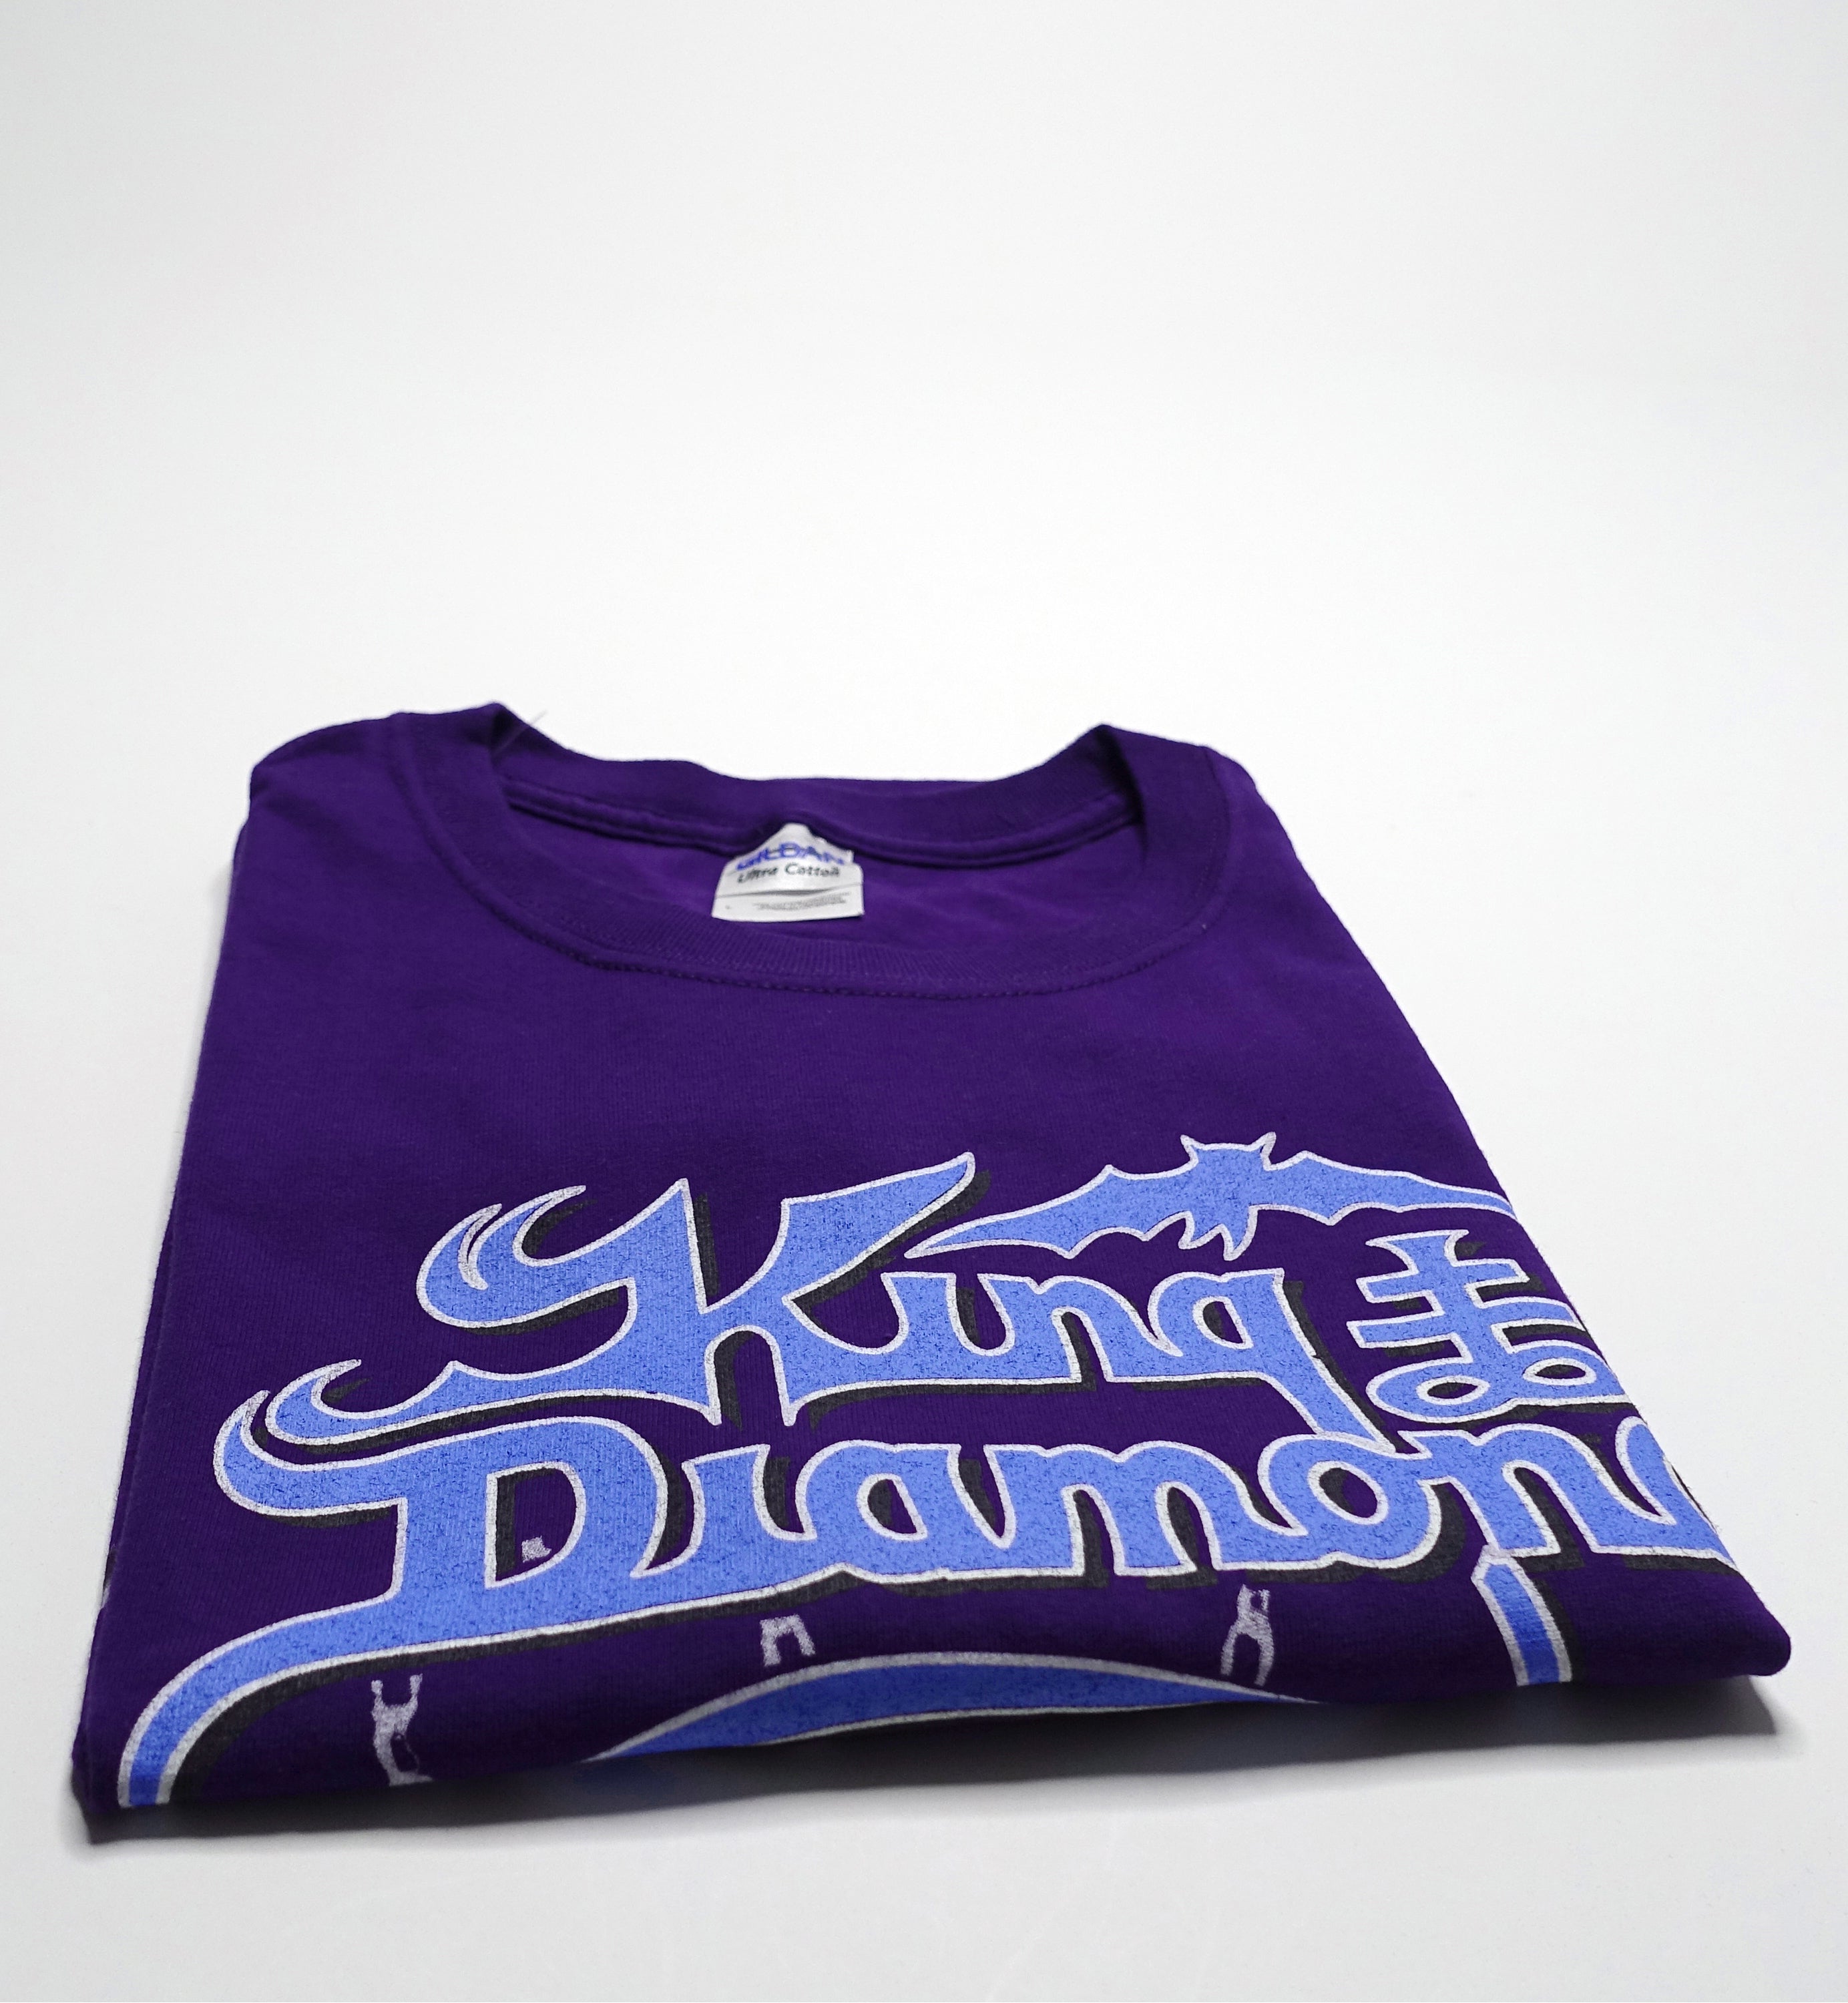 King Diamond – The Eye Shirt Size Large (Bootleg)